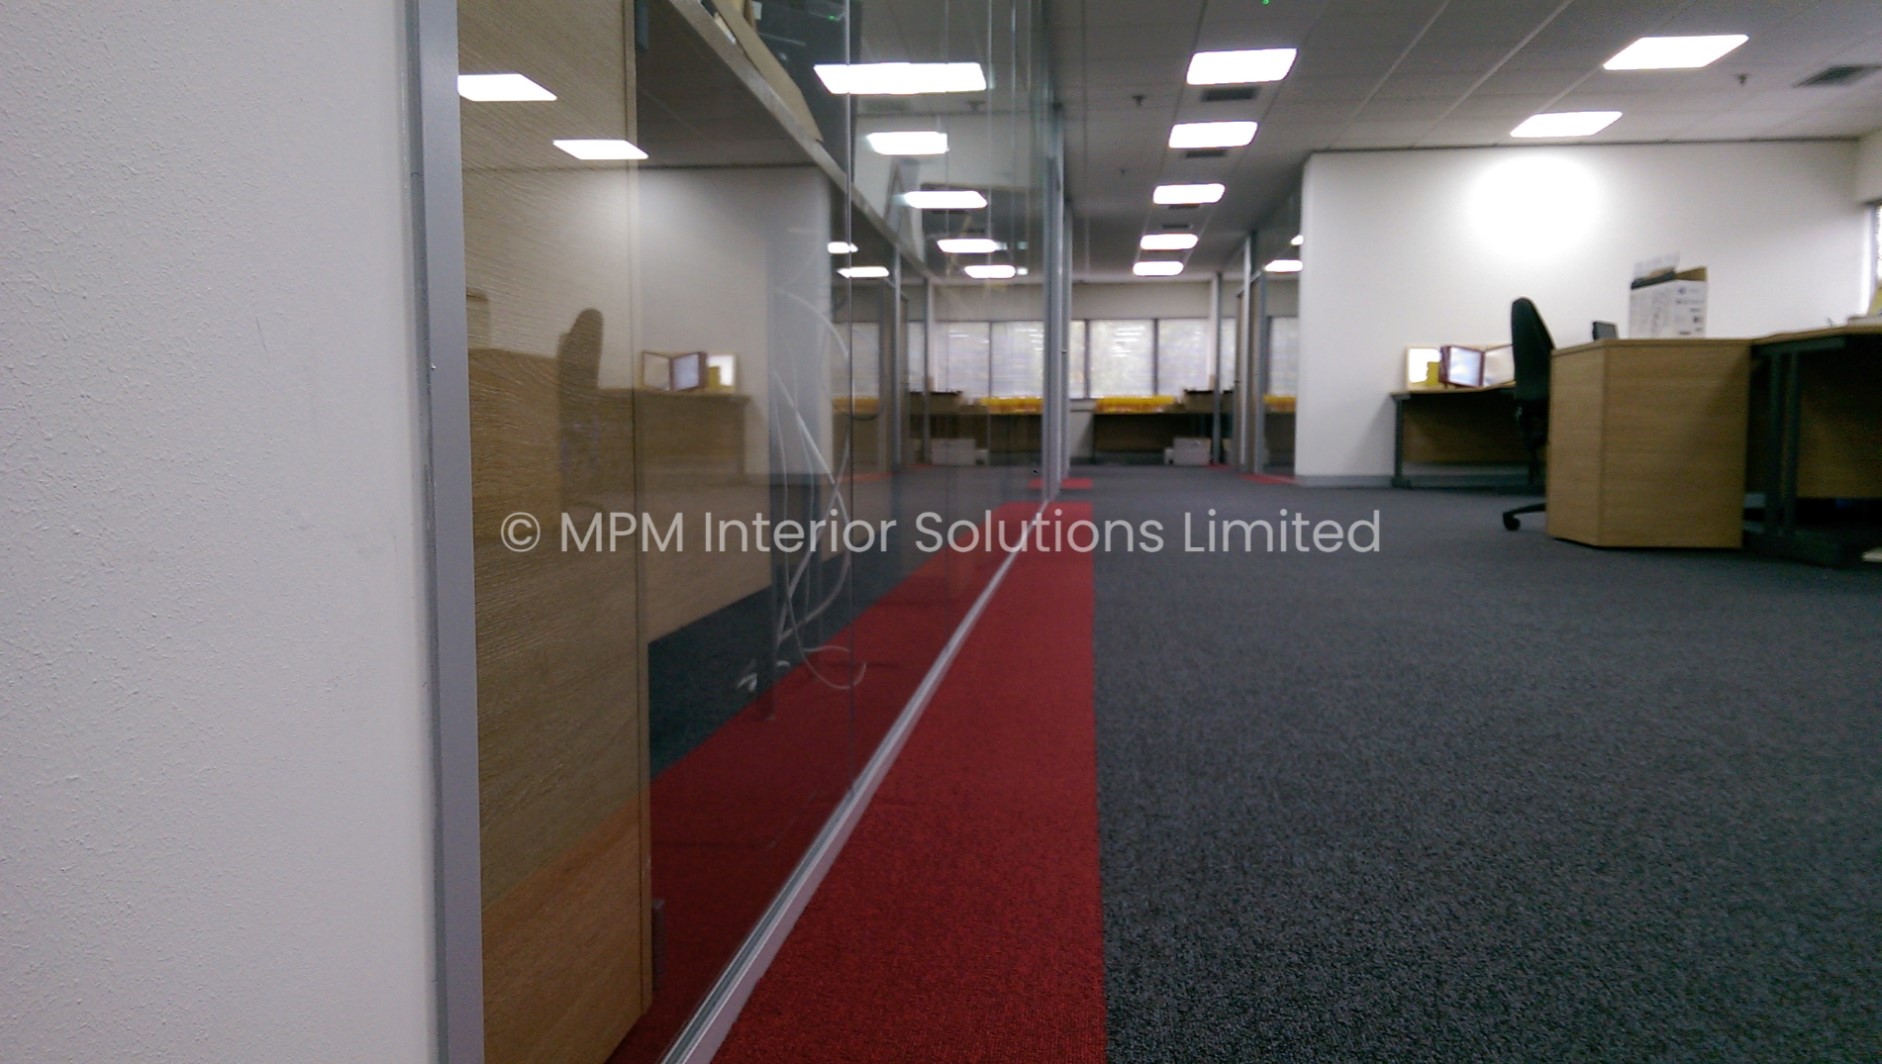 Frameless Glass Office Partitioning, 75mm > 100mm Demountable Office Partitioning, Office Refurbishment/Fit-Out, DHL International (UK) Ltd (Orbital Park, Hounslow, London), MPM Interior Solutions Limited